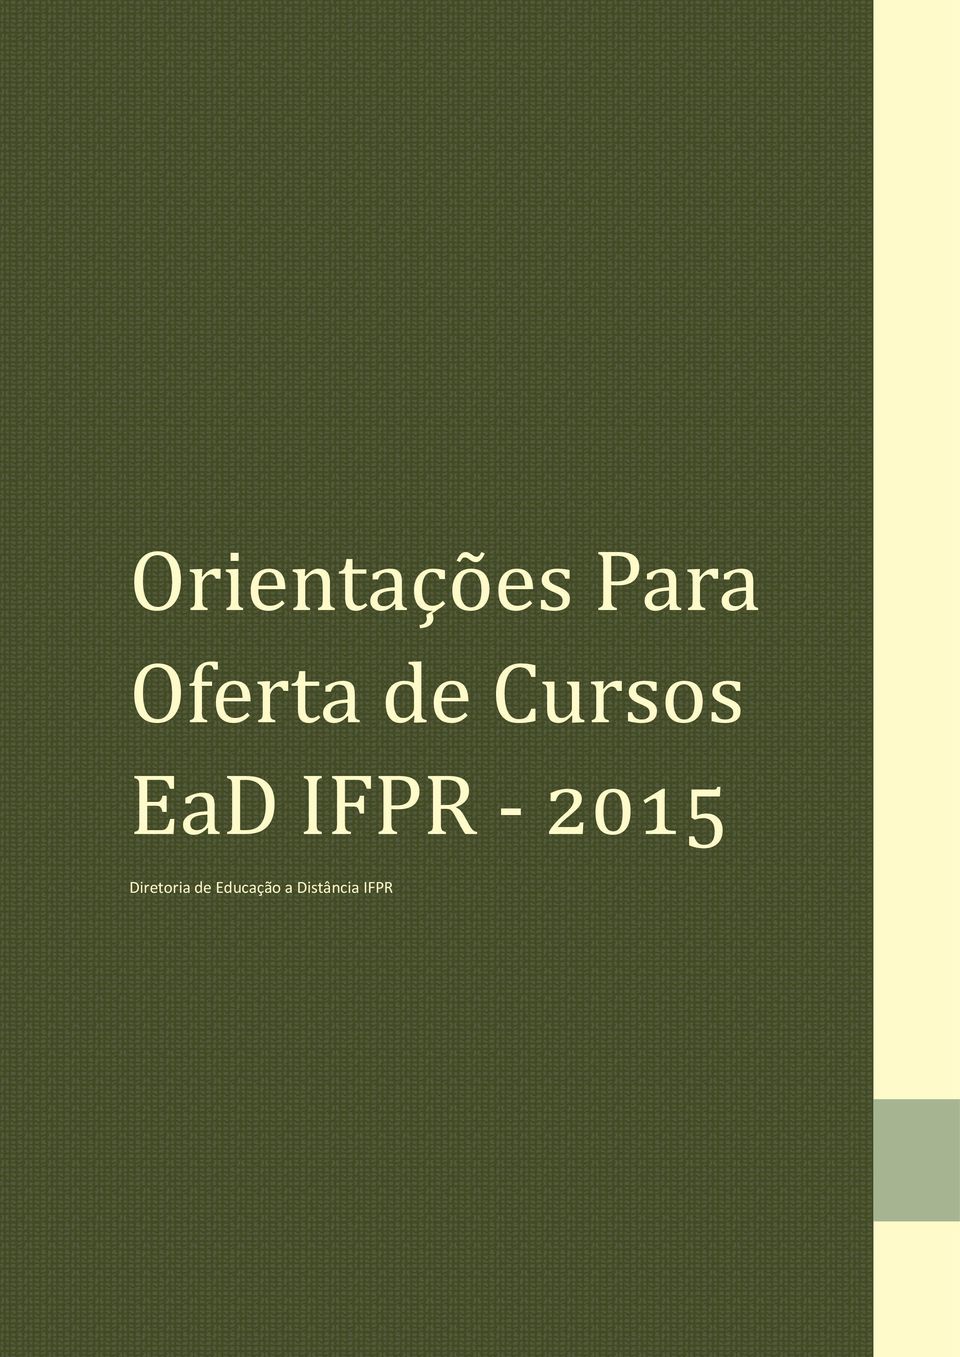 IFPR - 2015 Diretoria